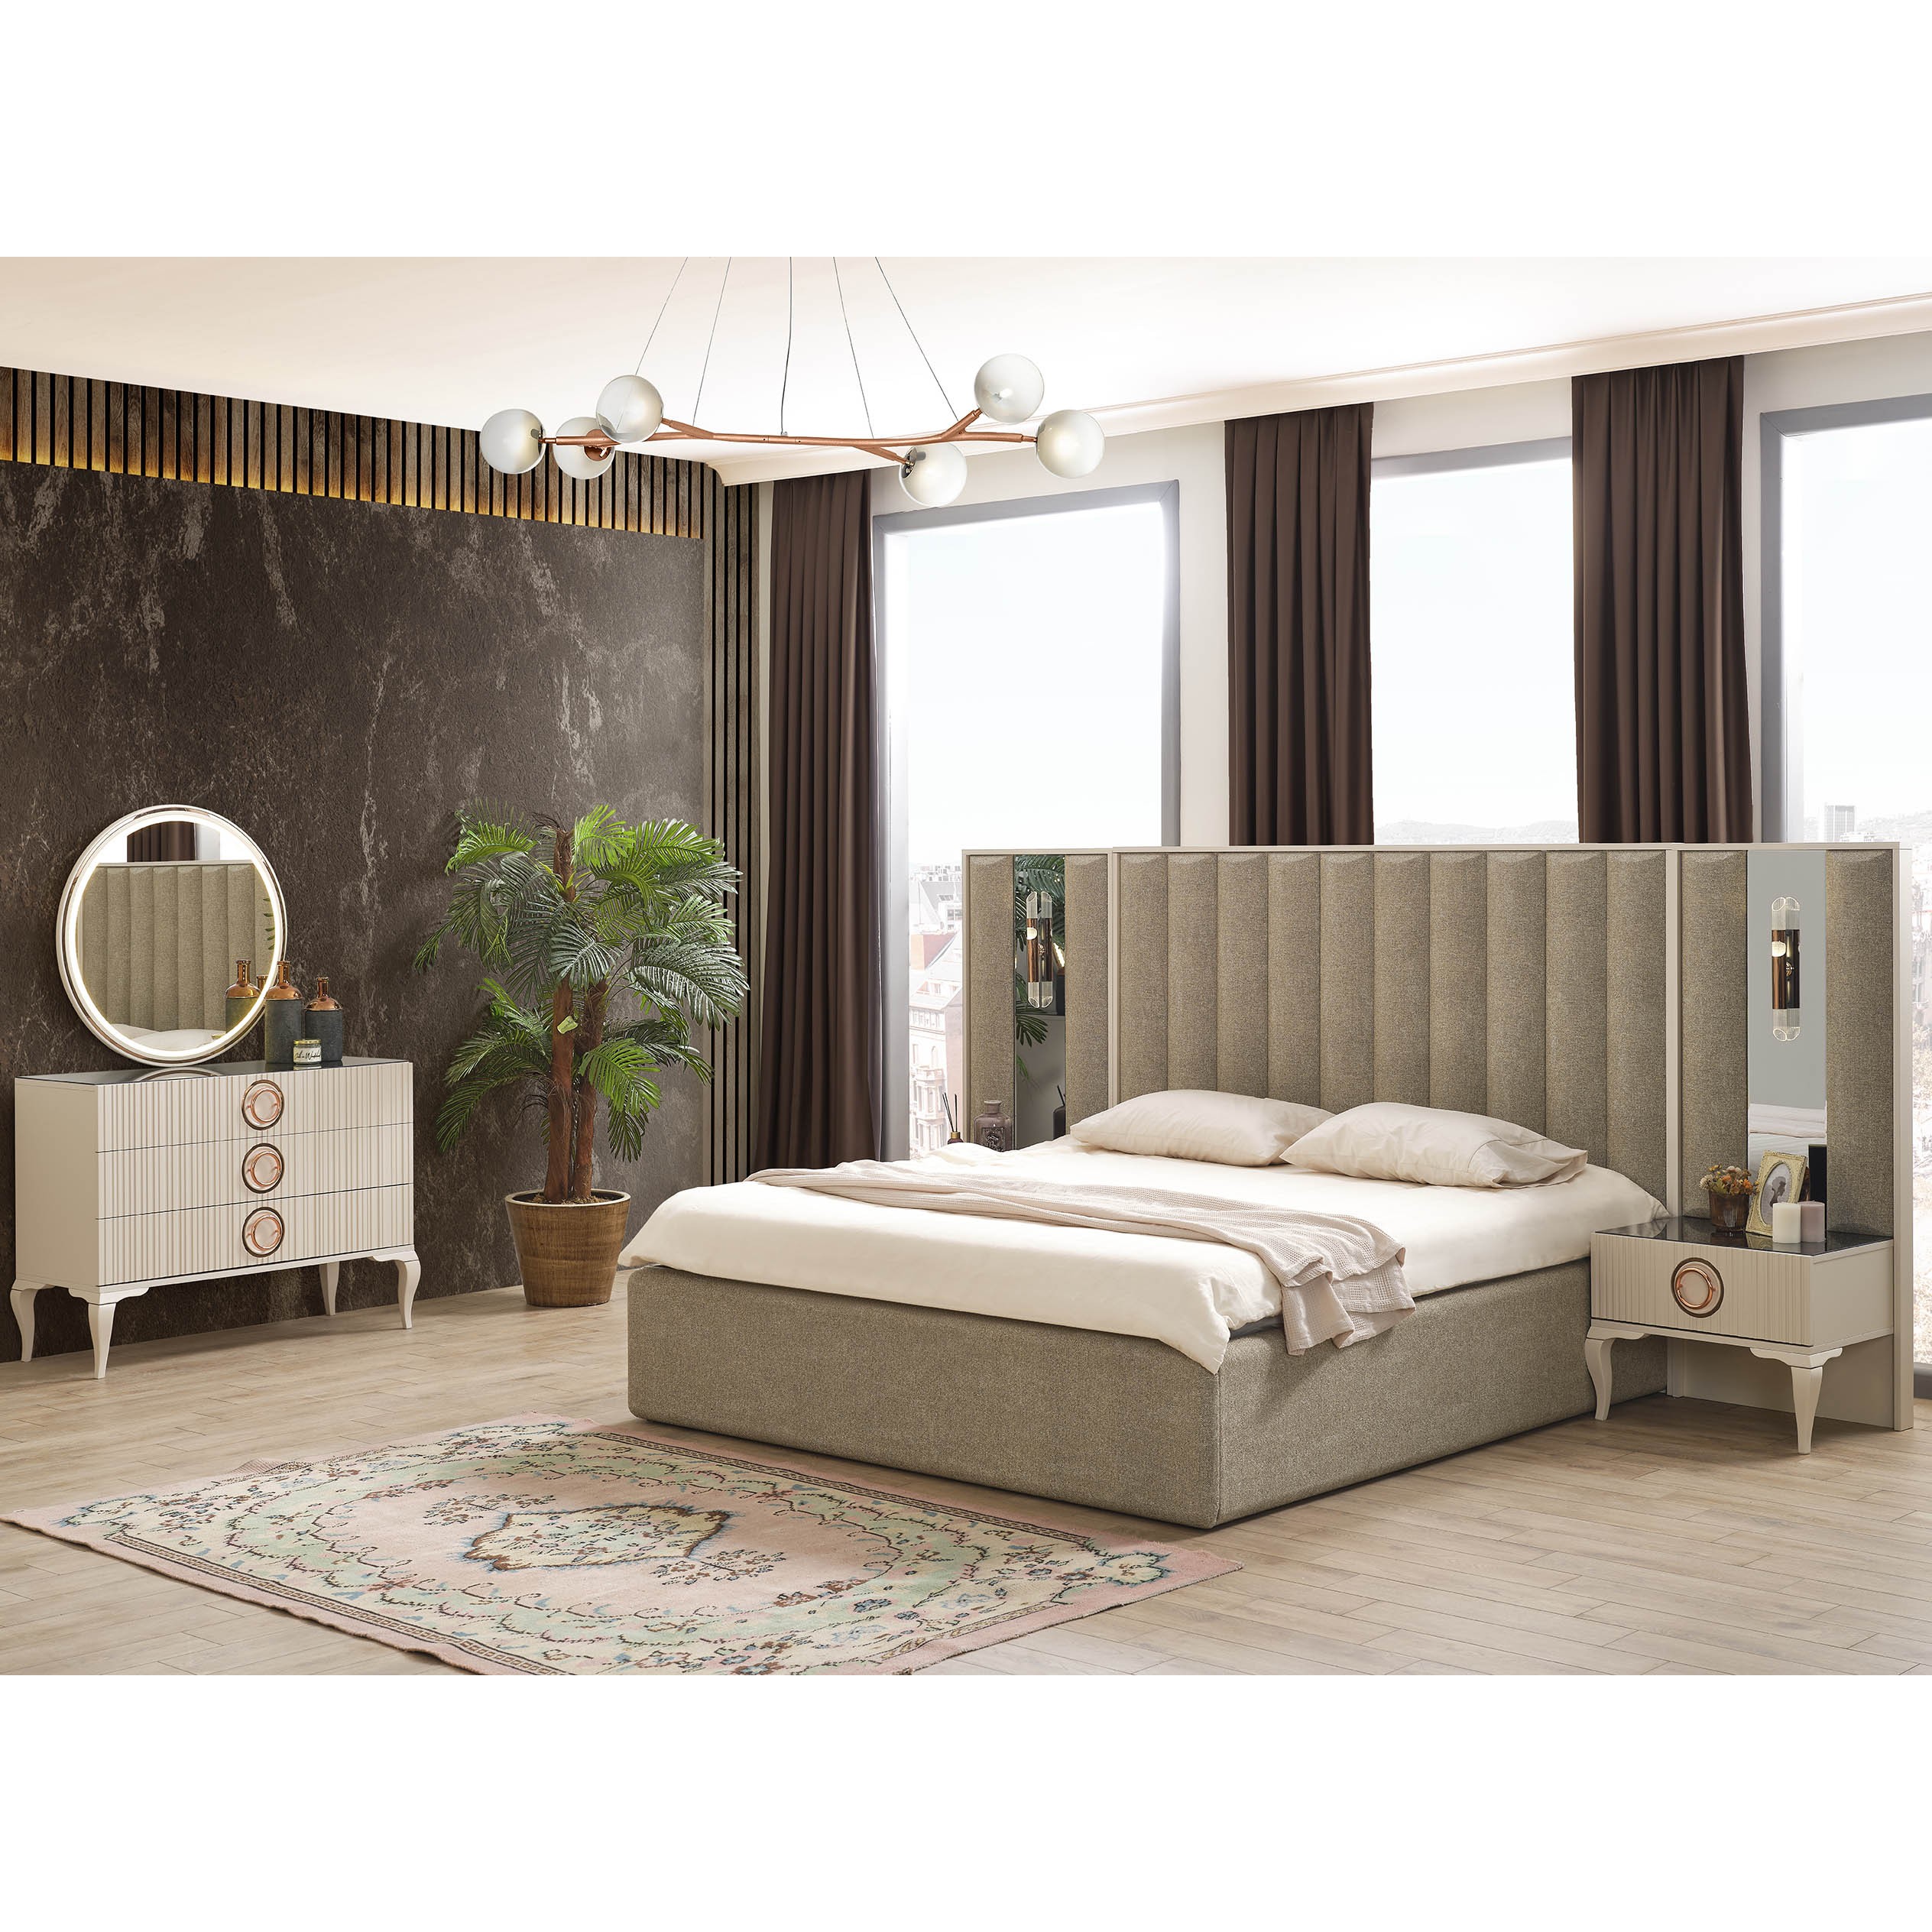 Style Larissa Vol1 Bed With Storage 160x200 cm